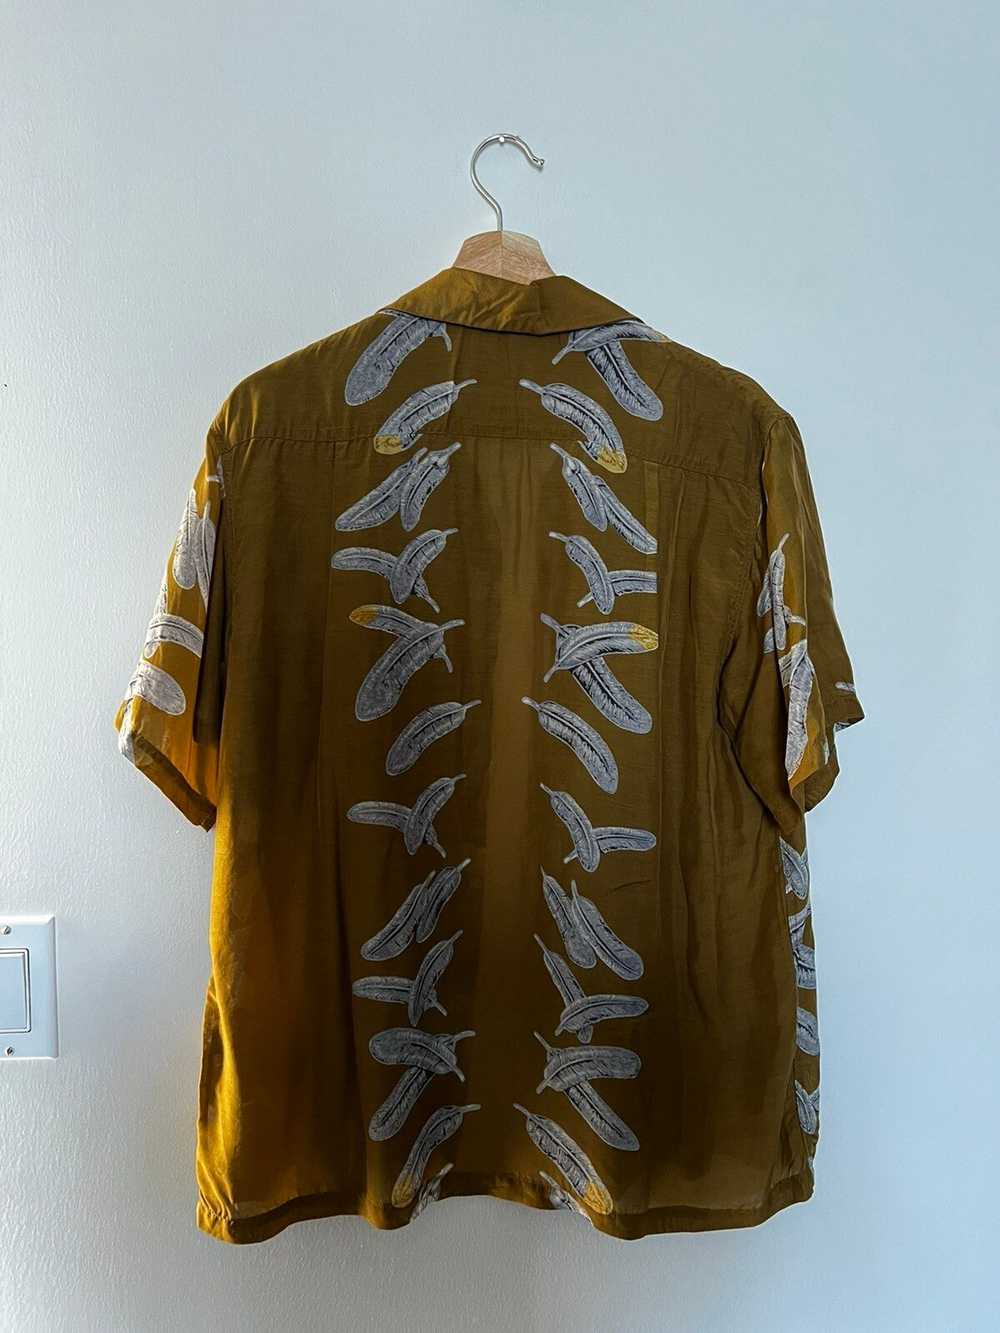 Kapital Feather & Eagle motif bowling shirt - image 4